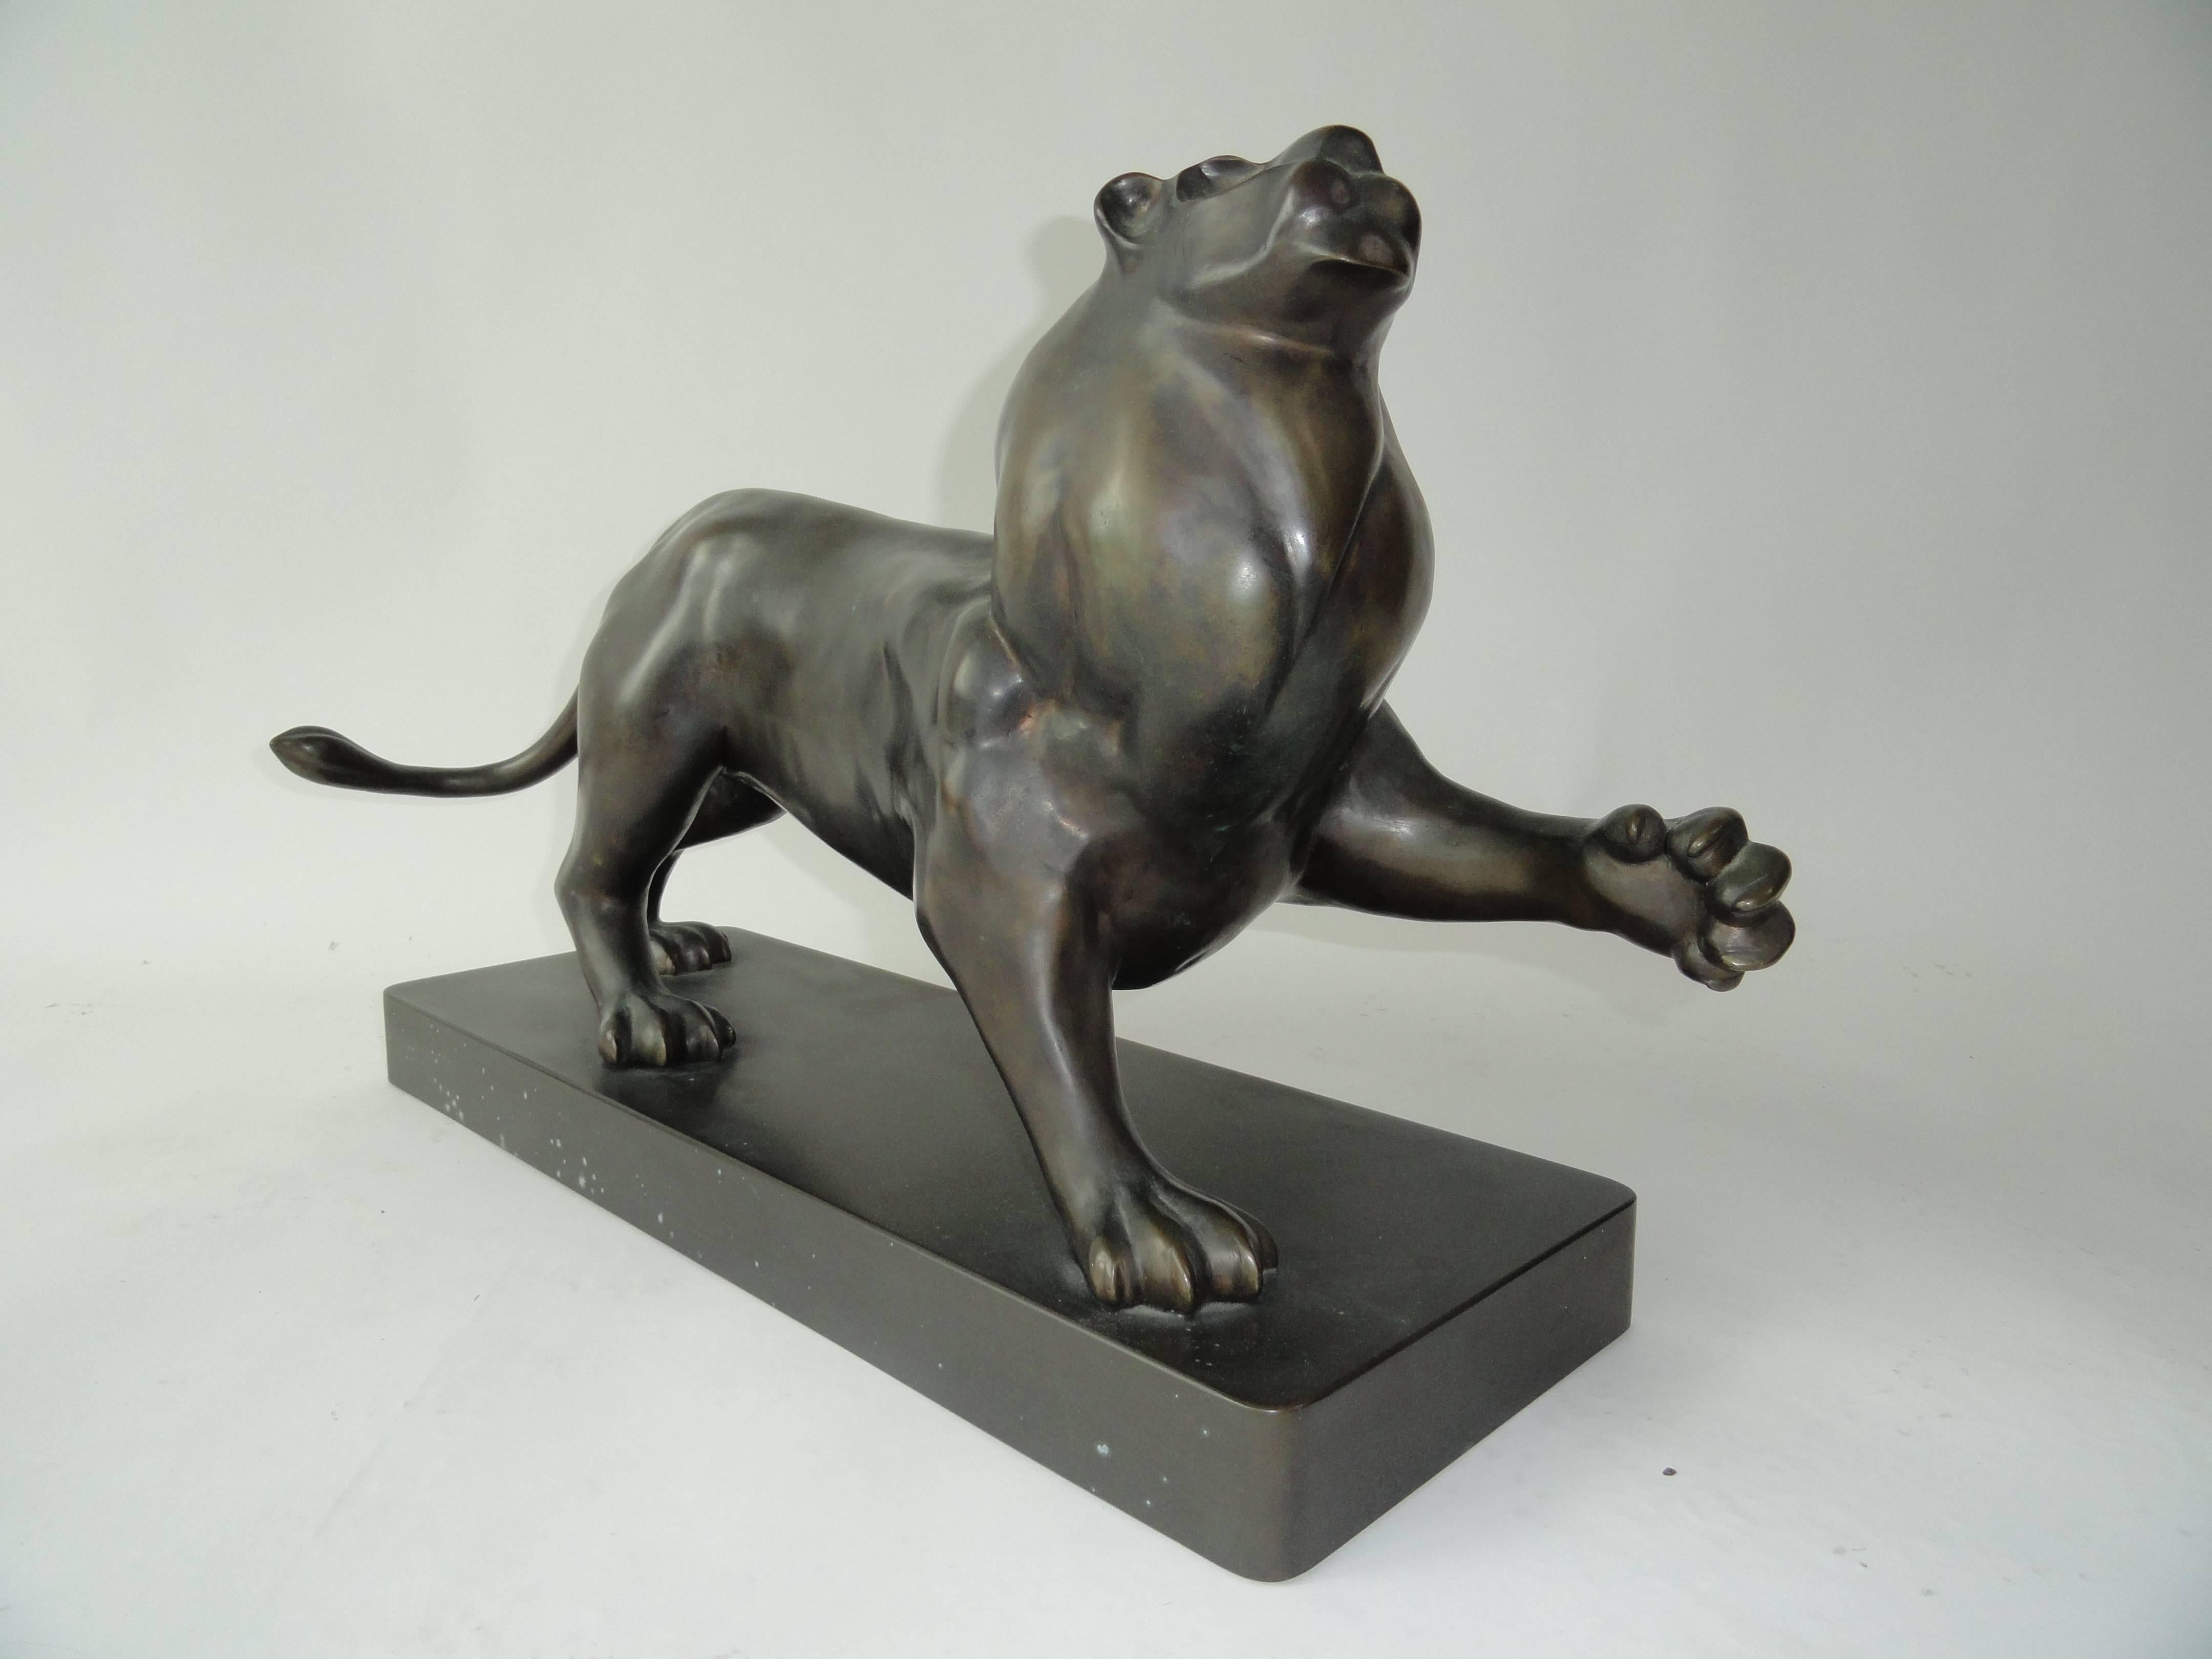 Signed Estevez by Roberto Estevez, lion in bronze. Sculpture designed for Karl Springer, New York. Model based on Pierre-Jules Mêne’s bronze animal sculptures of the 19th century.